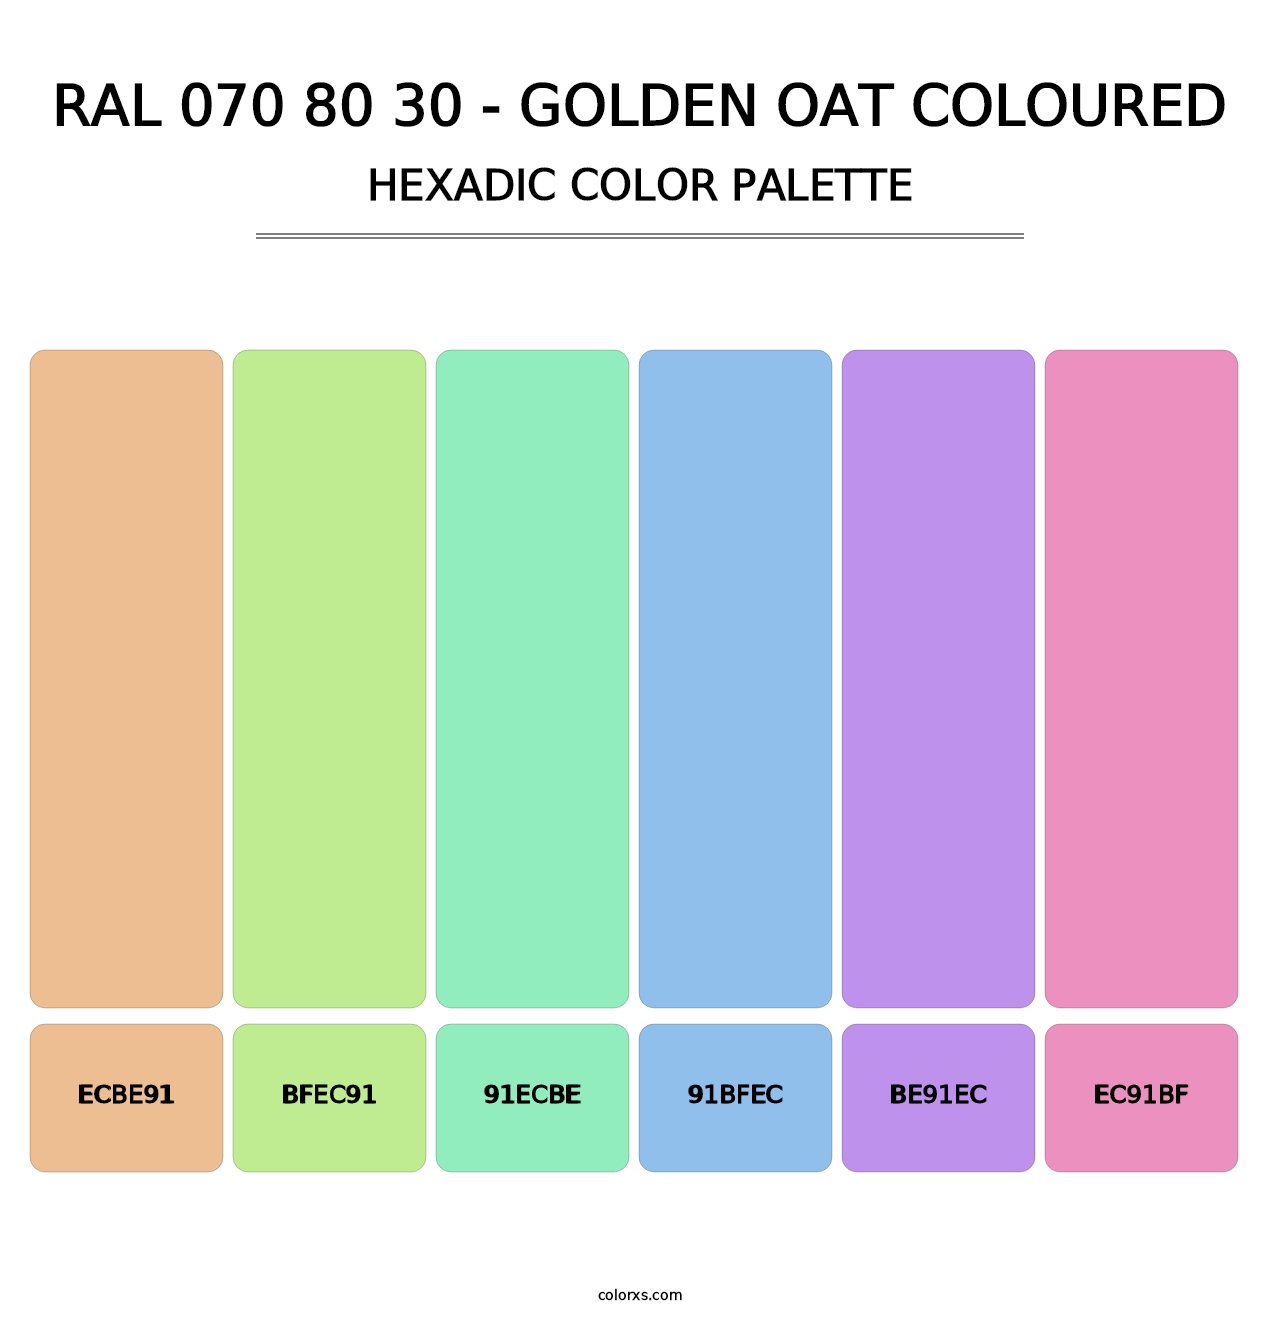 RAL 070 80 30 - Golden Oat Coloured - Hexadic Color Palette